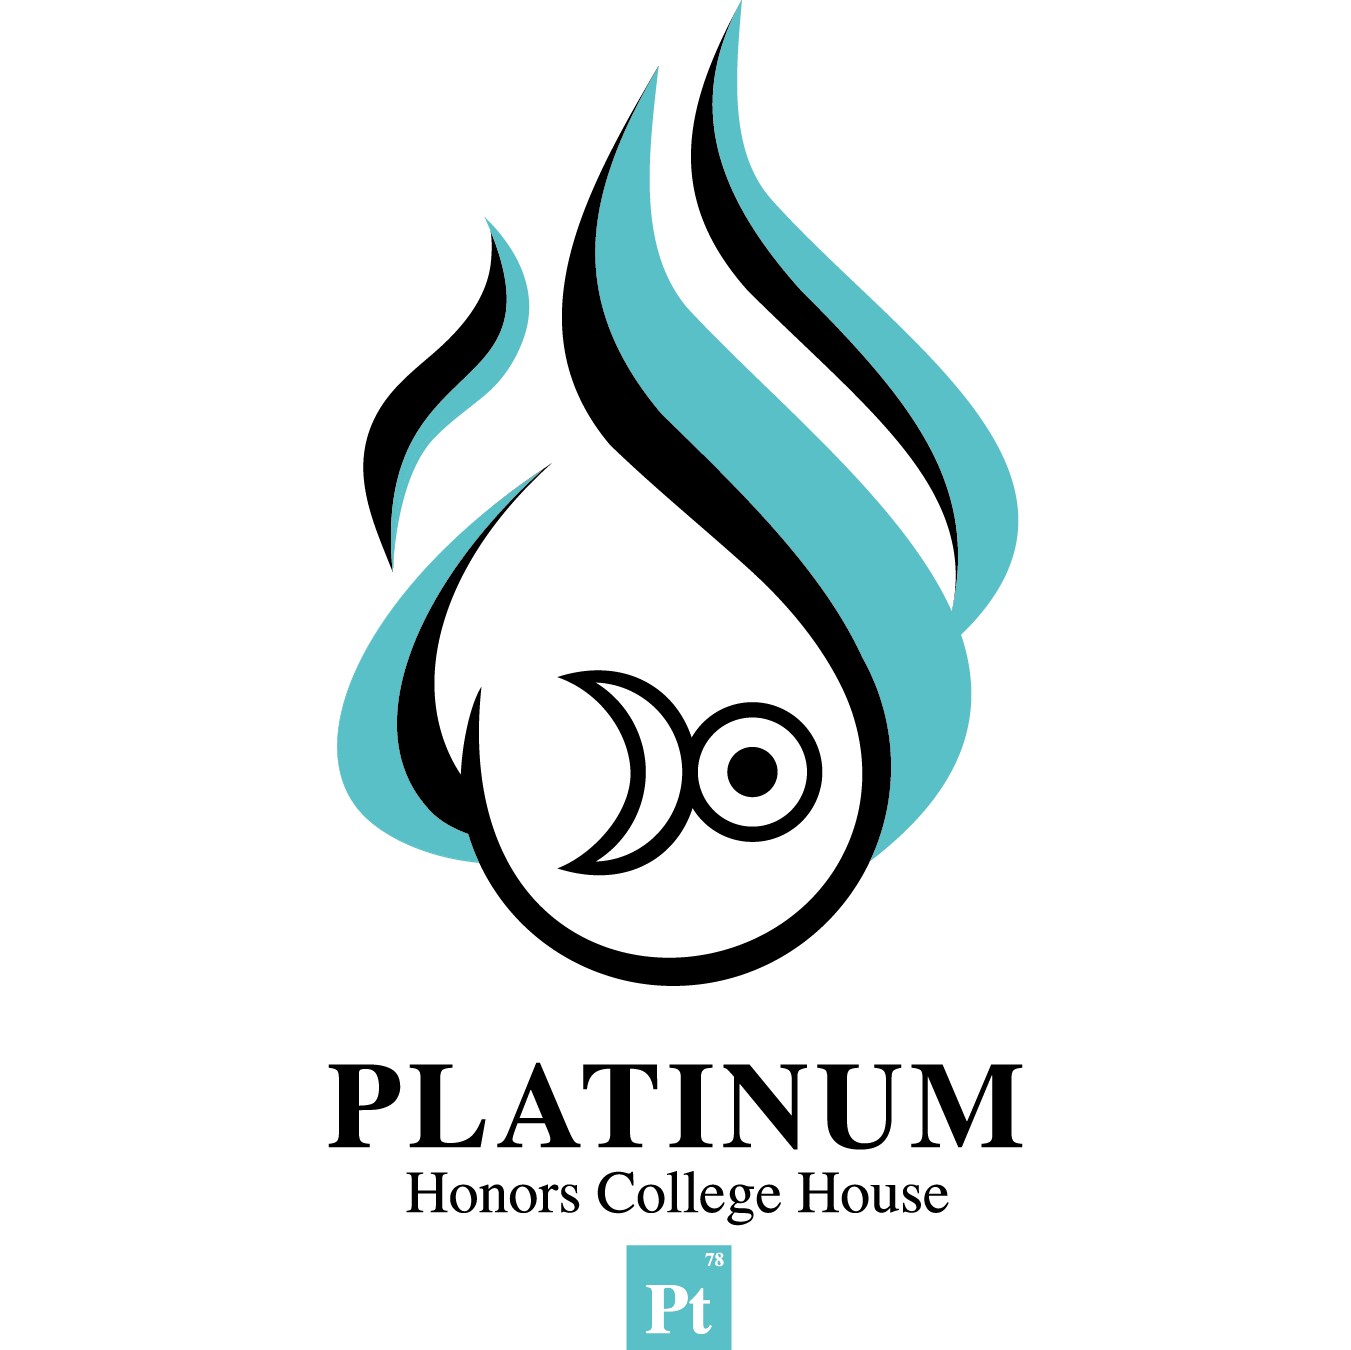 Platinum House Logo